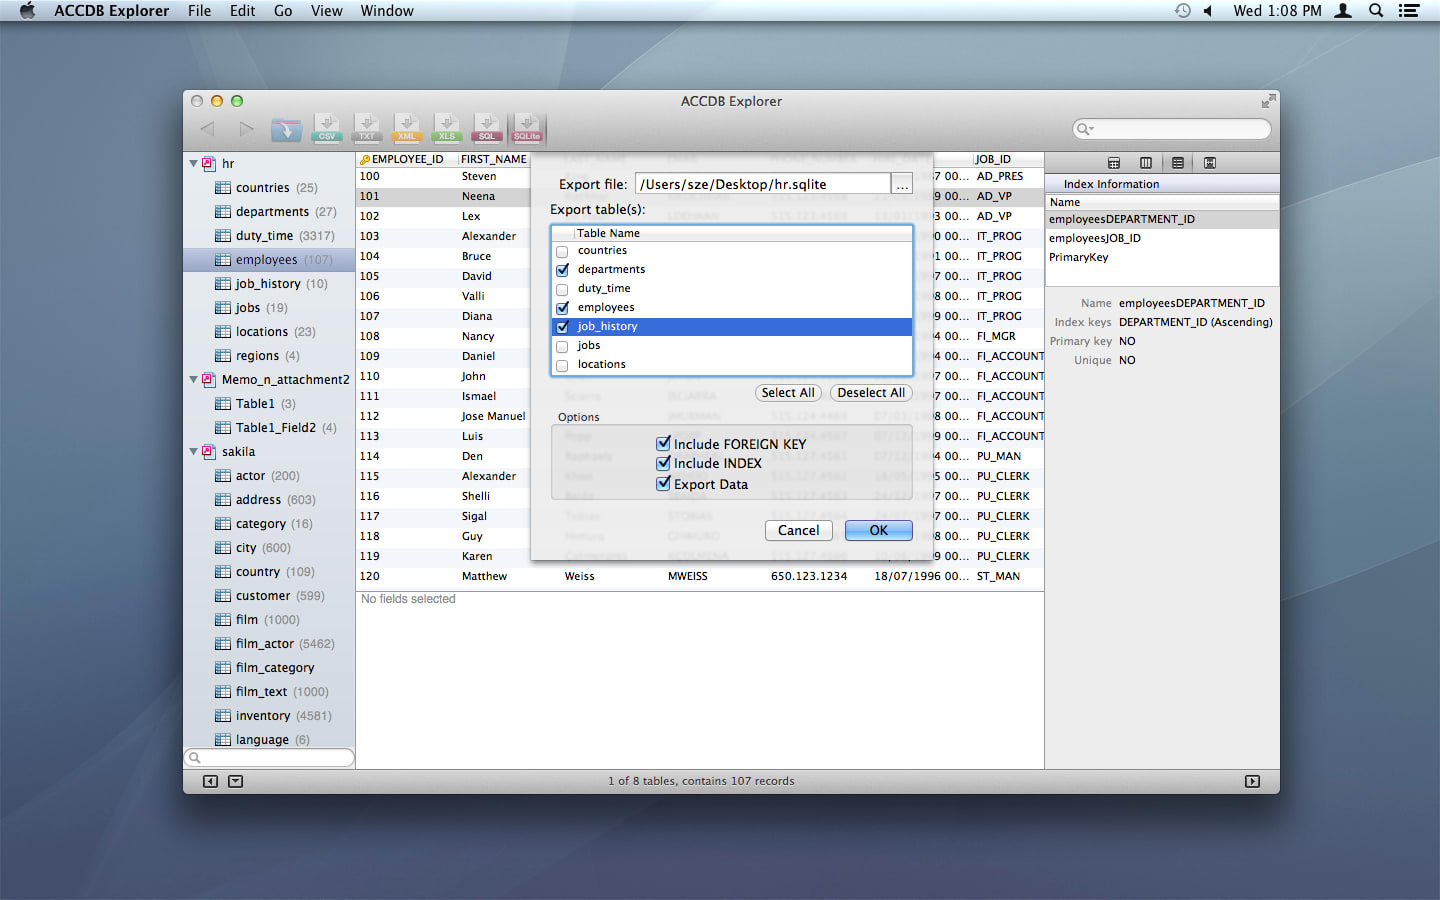 Apps On Mac To Open Xlsx Files